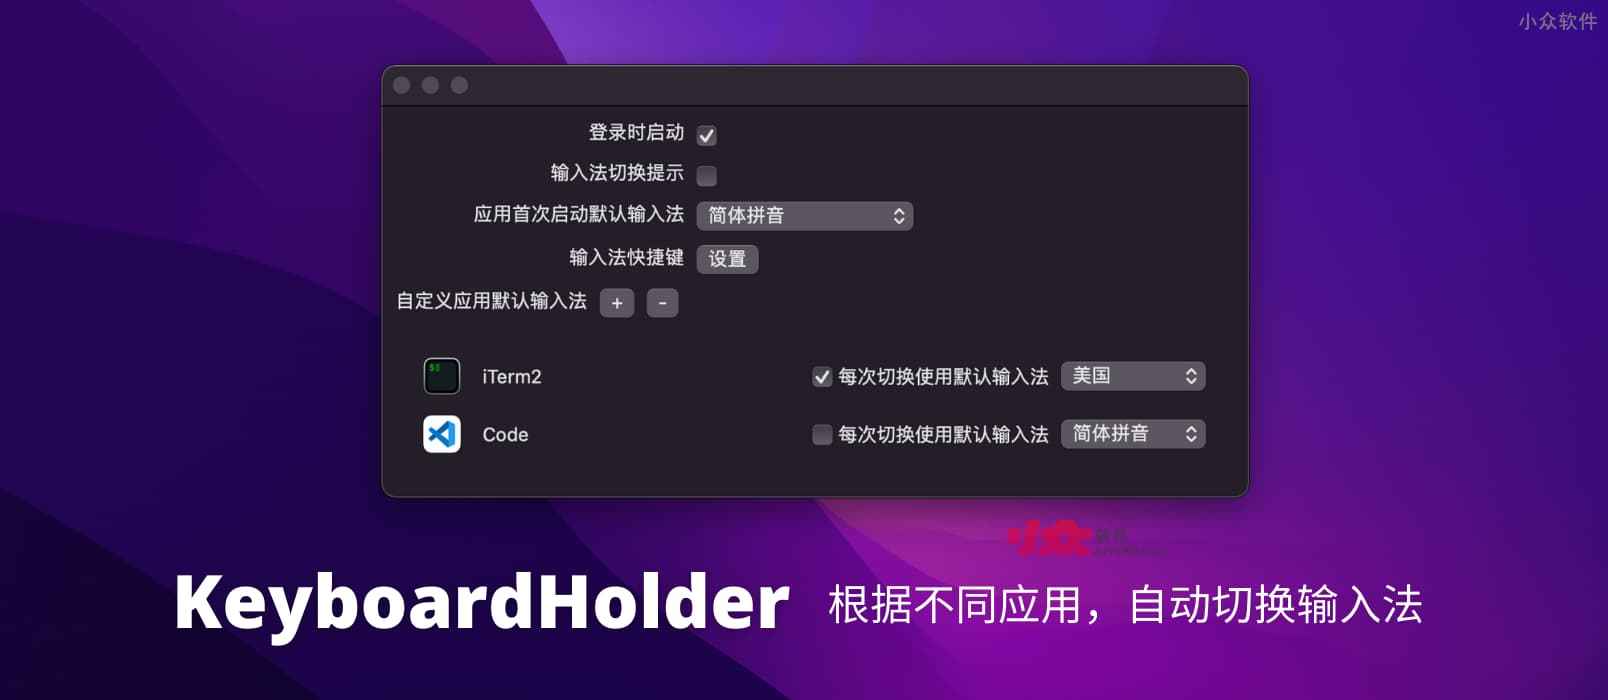 KeyboardHolder – 根据不同应用，自动切换输入法[macOS]